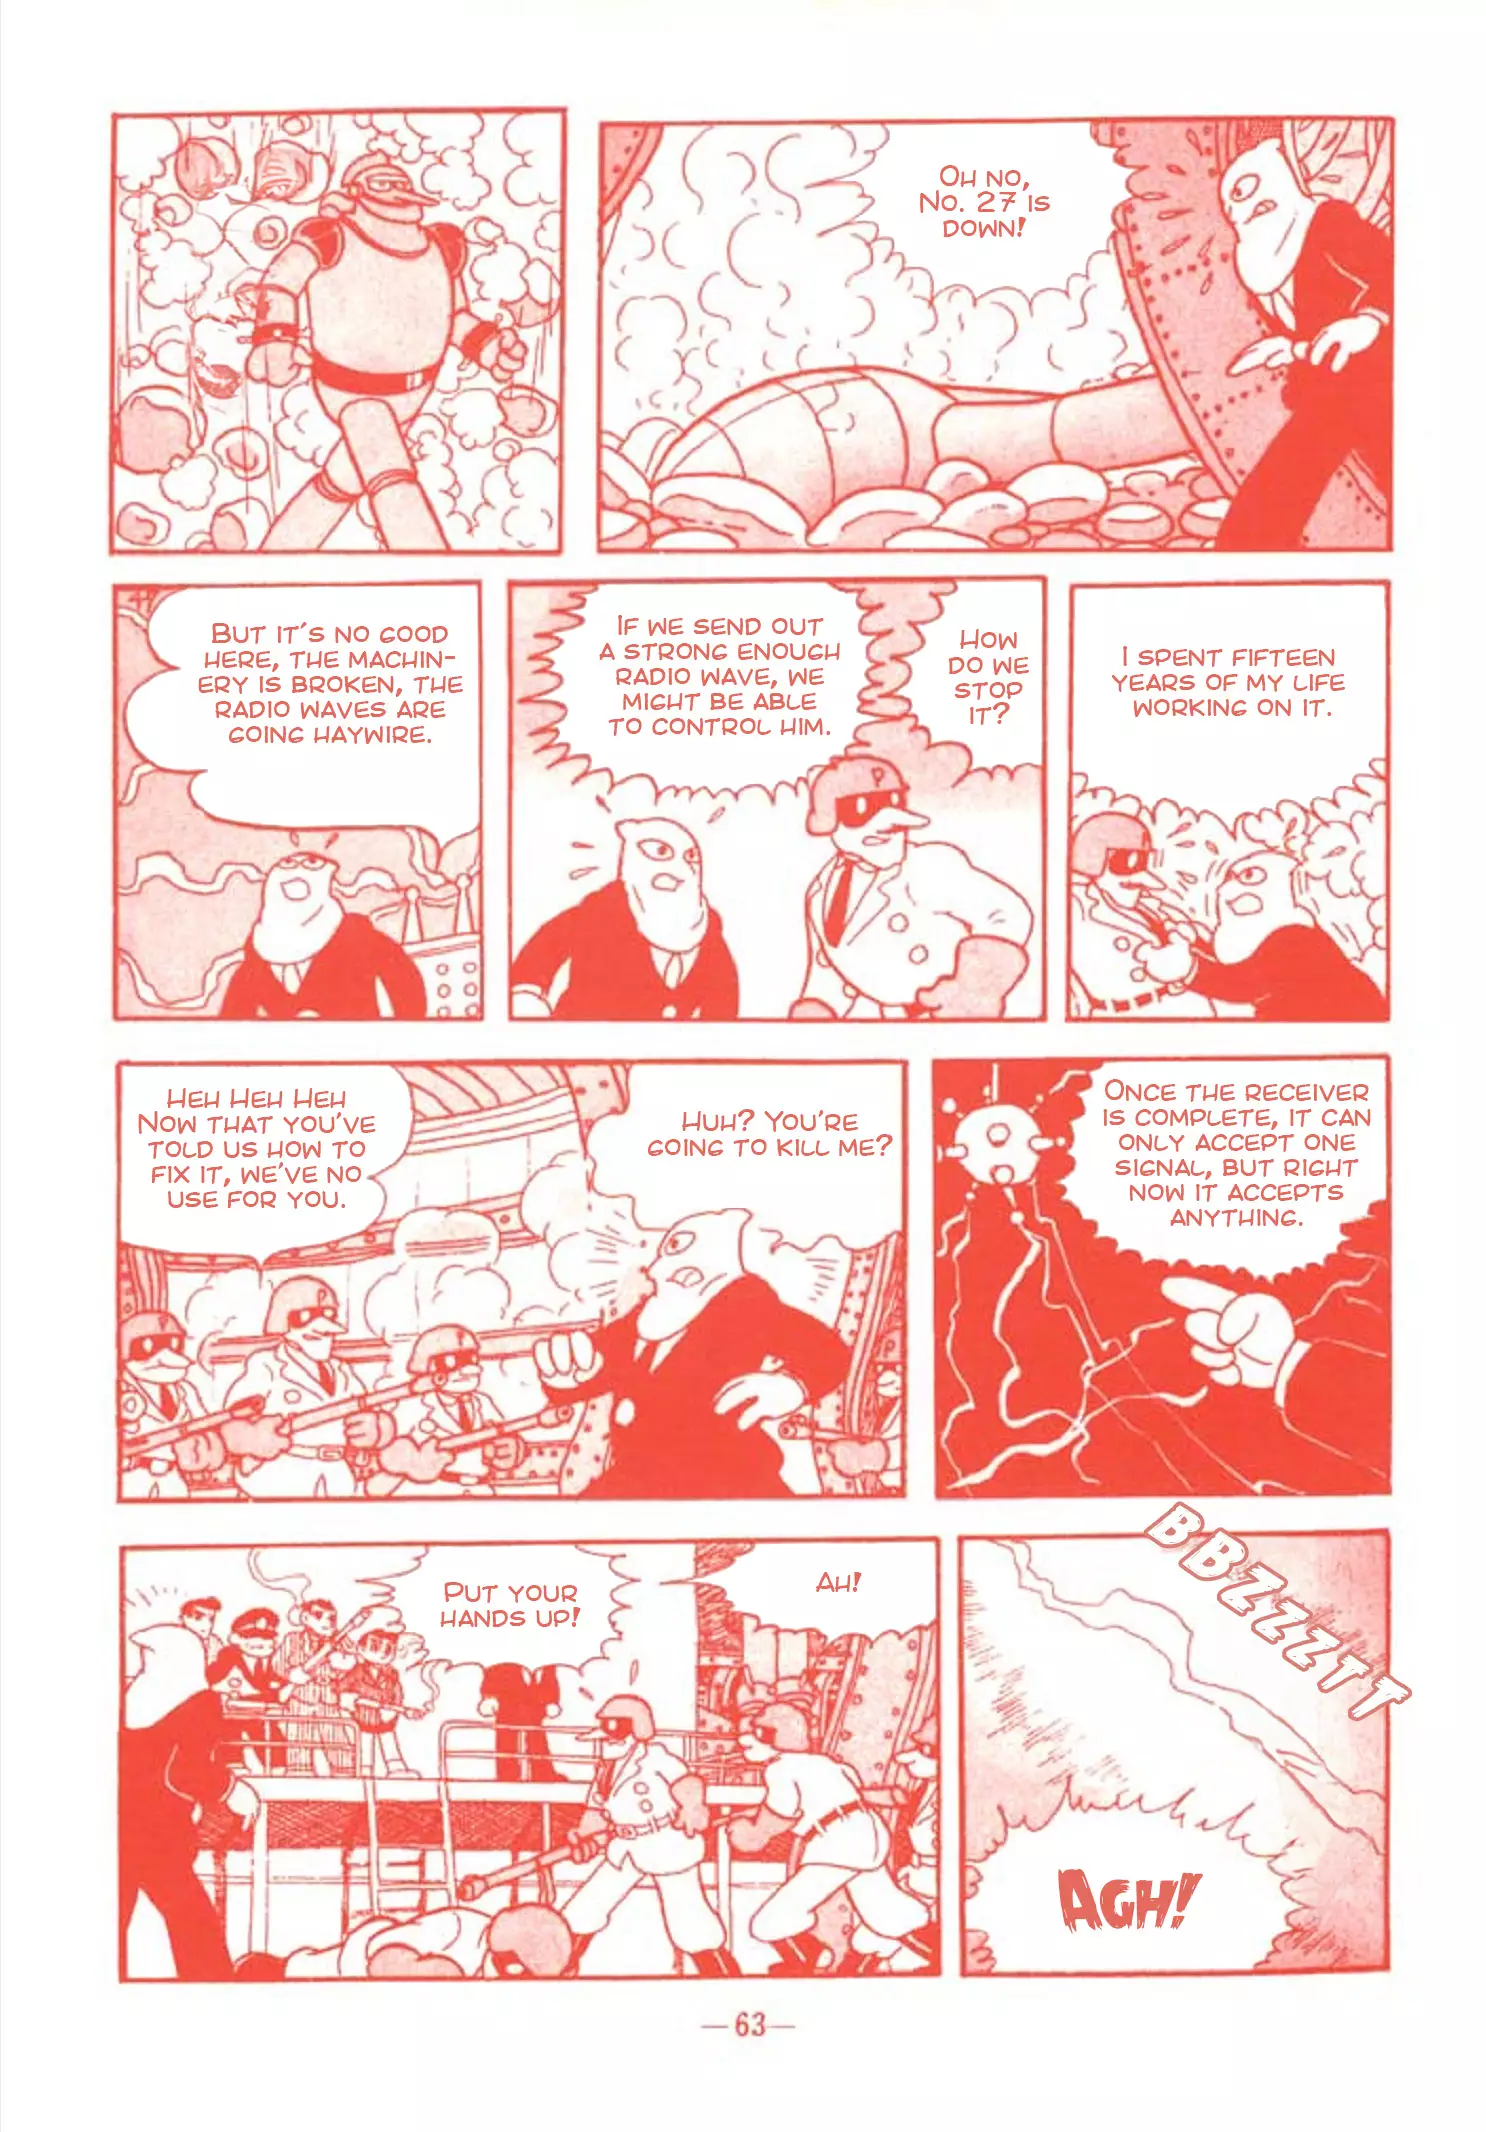 Tetsujin No. 28 Full Length Detective Manga - 1 page 66-f64bb437